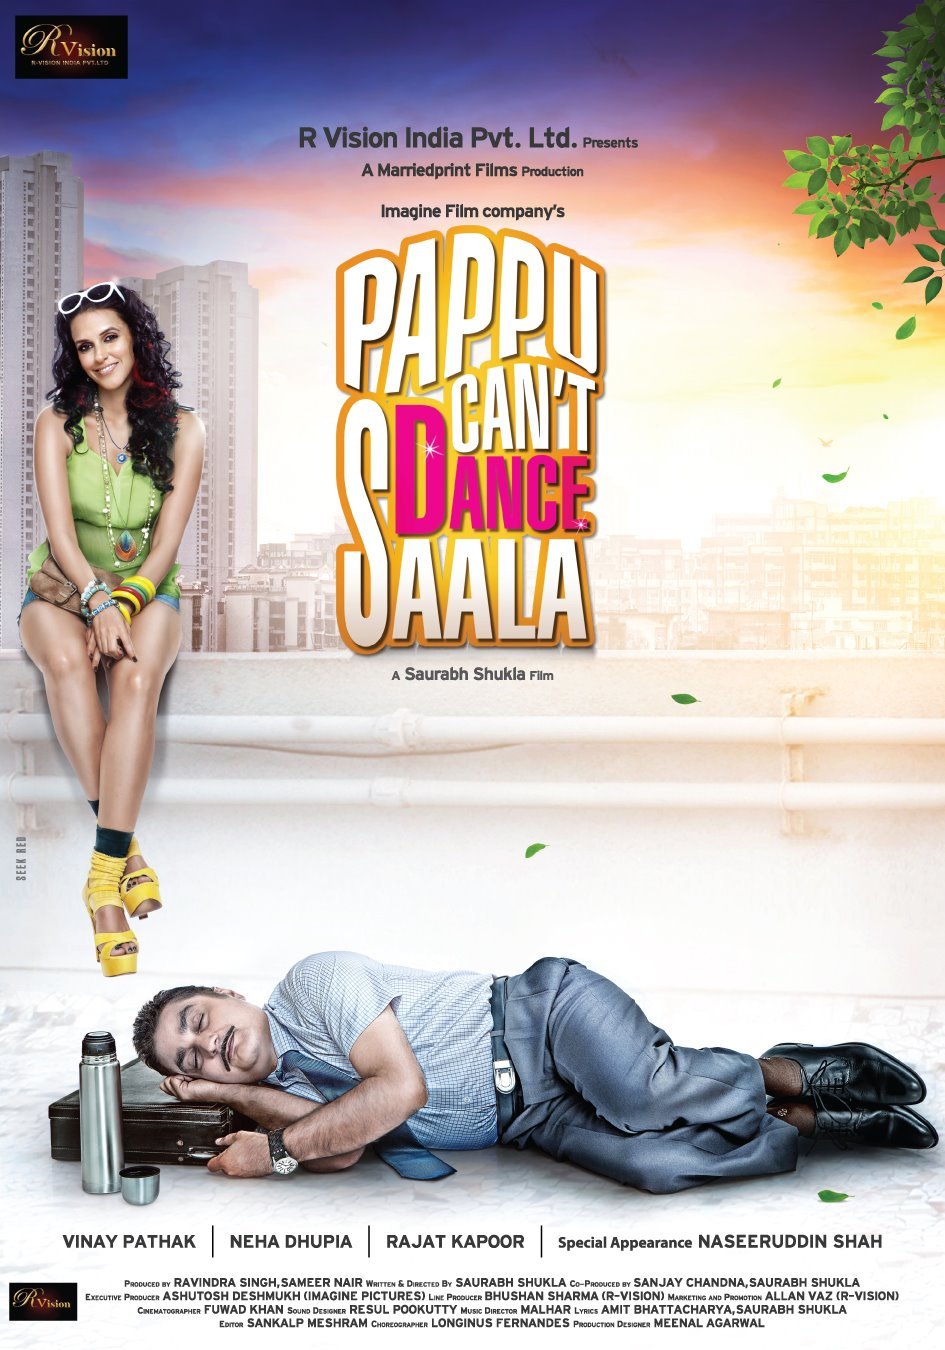 Pappu Can't Dance Saala Movie Poster